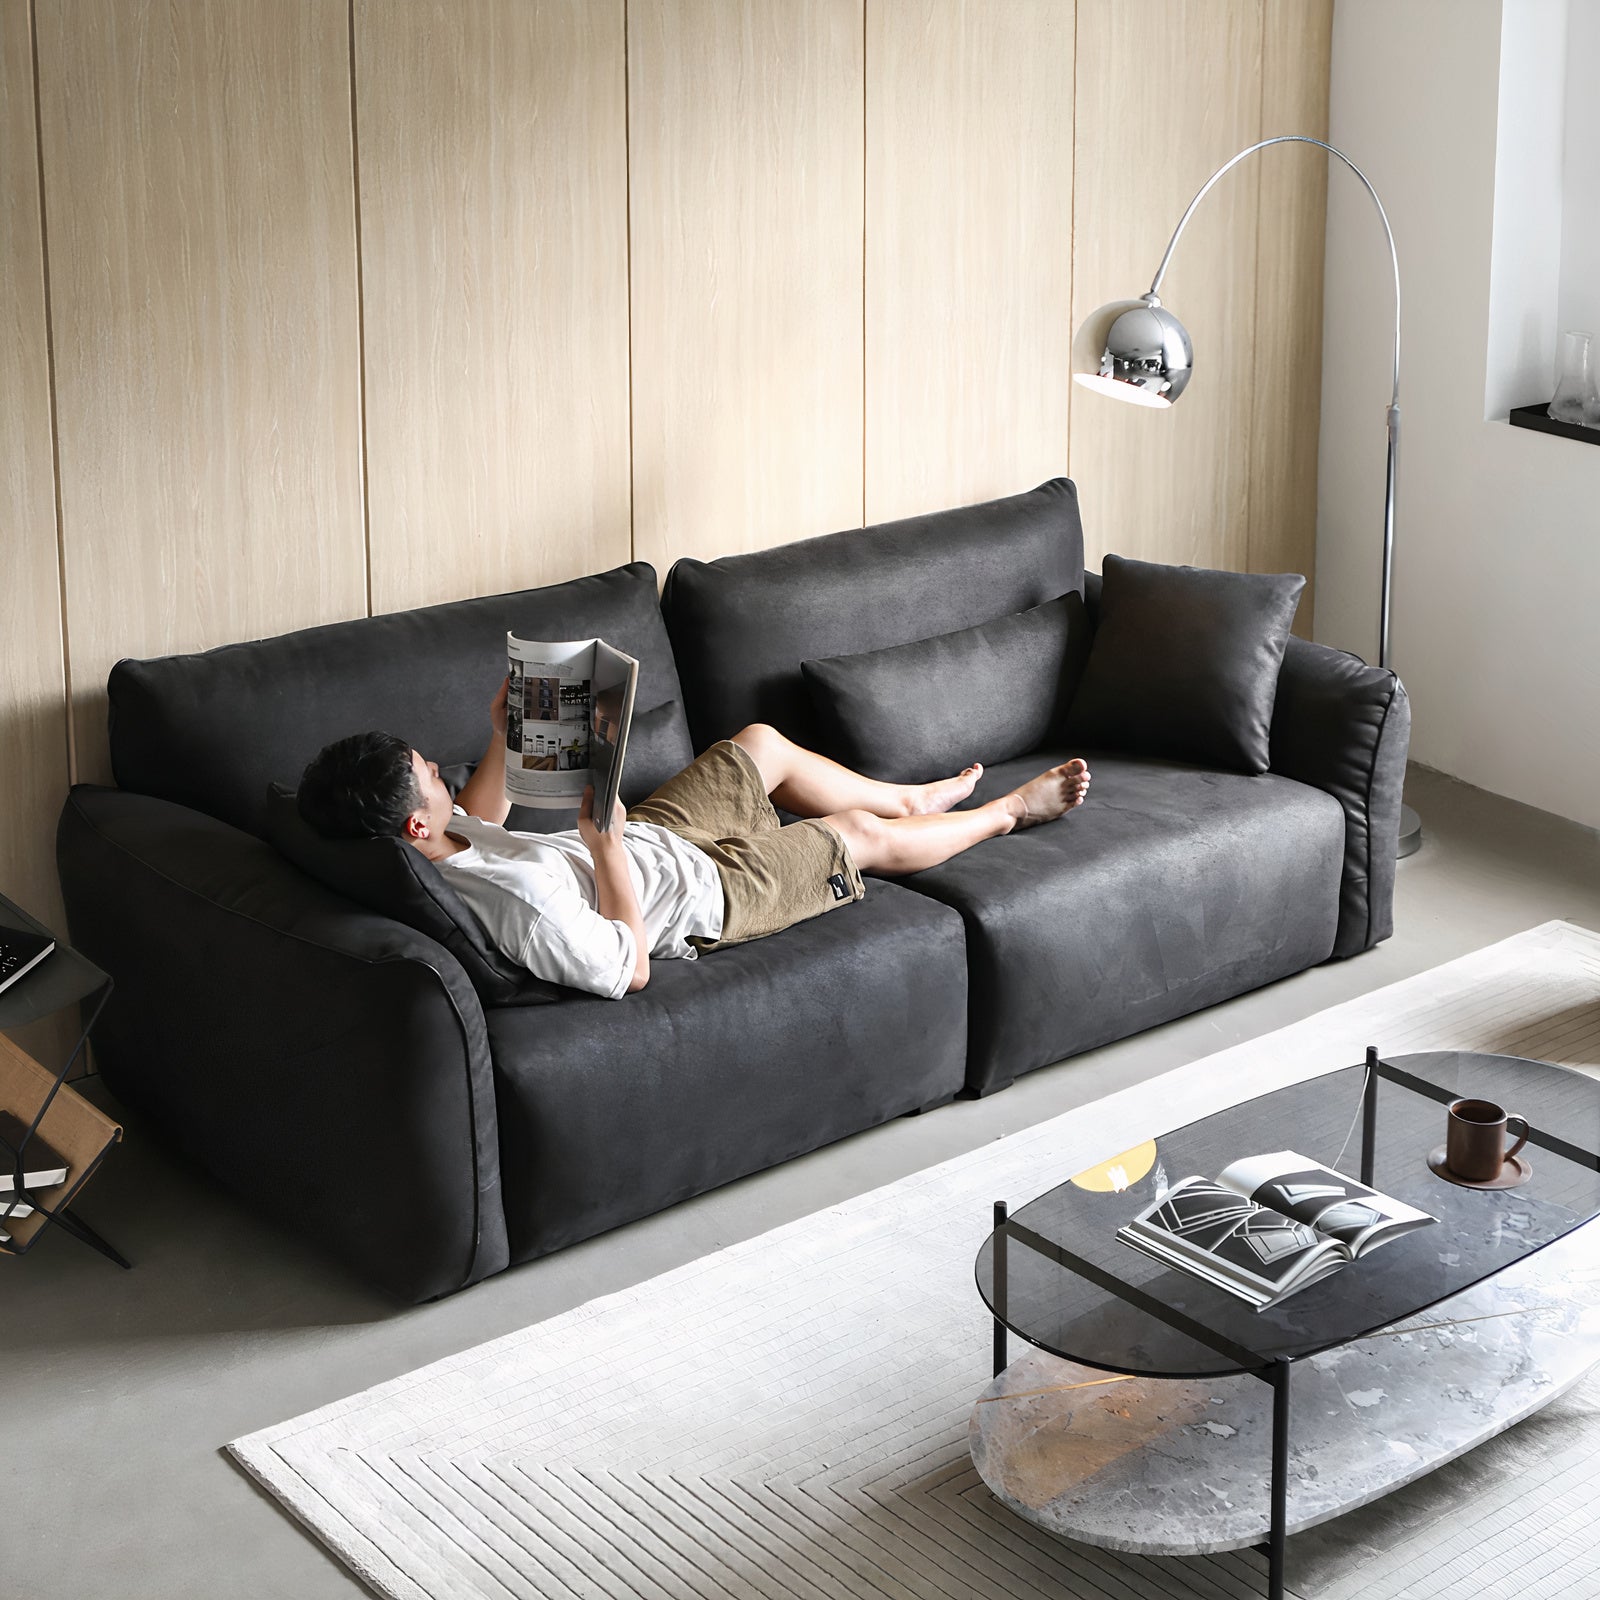 Jolt Ltalian Home Row Leather Sofa